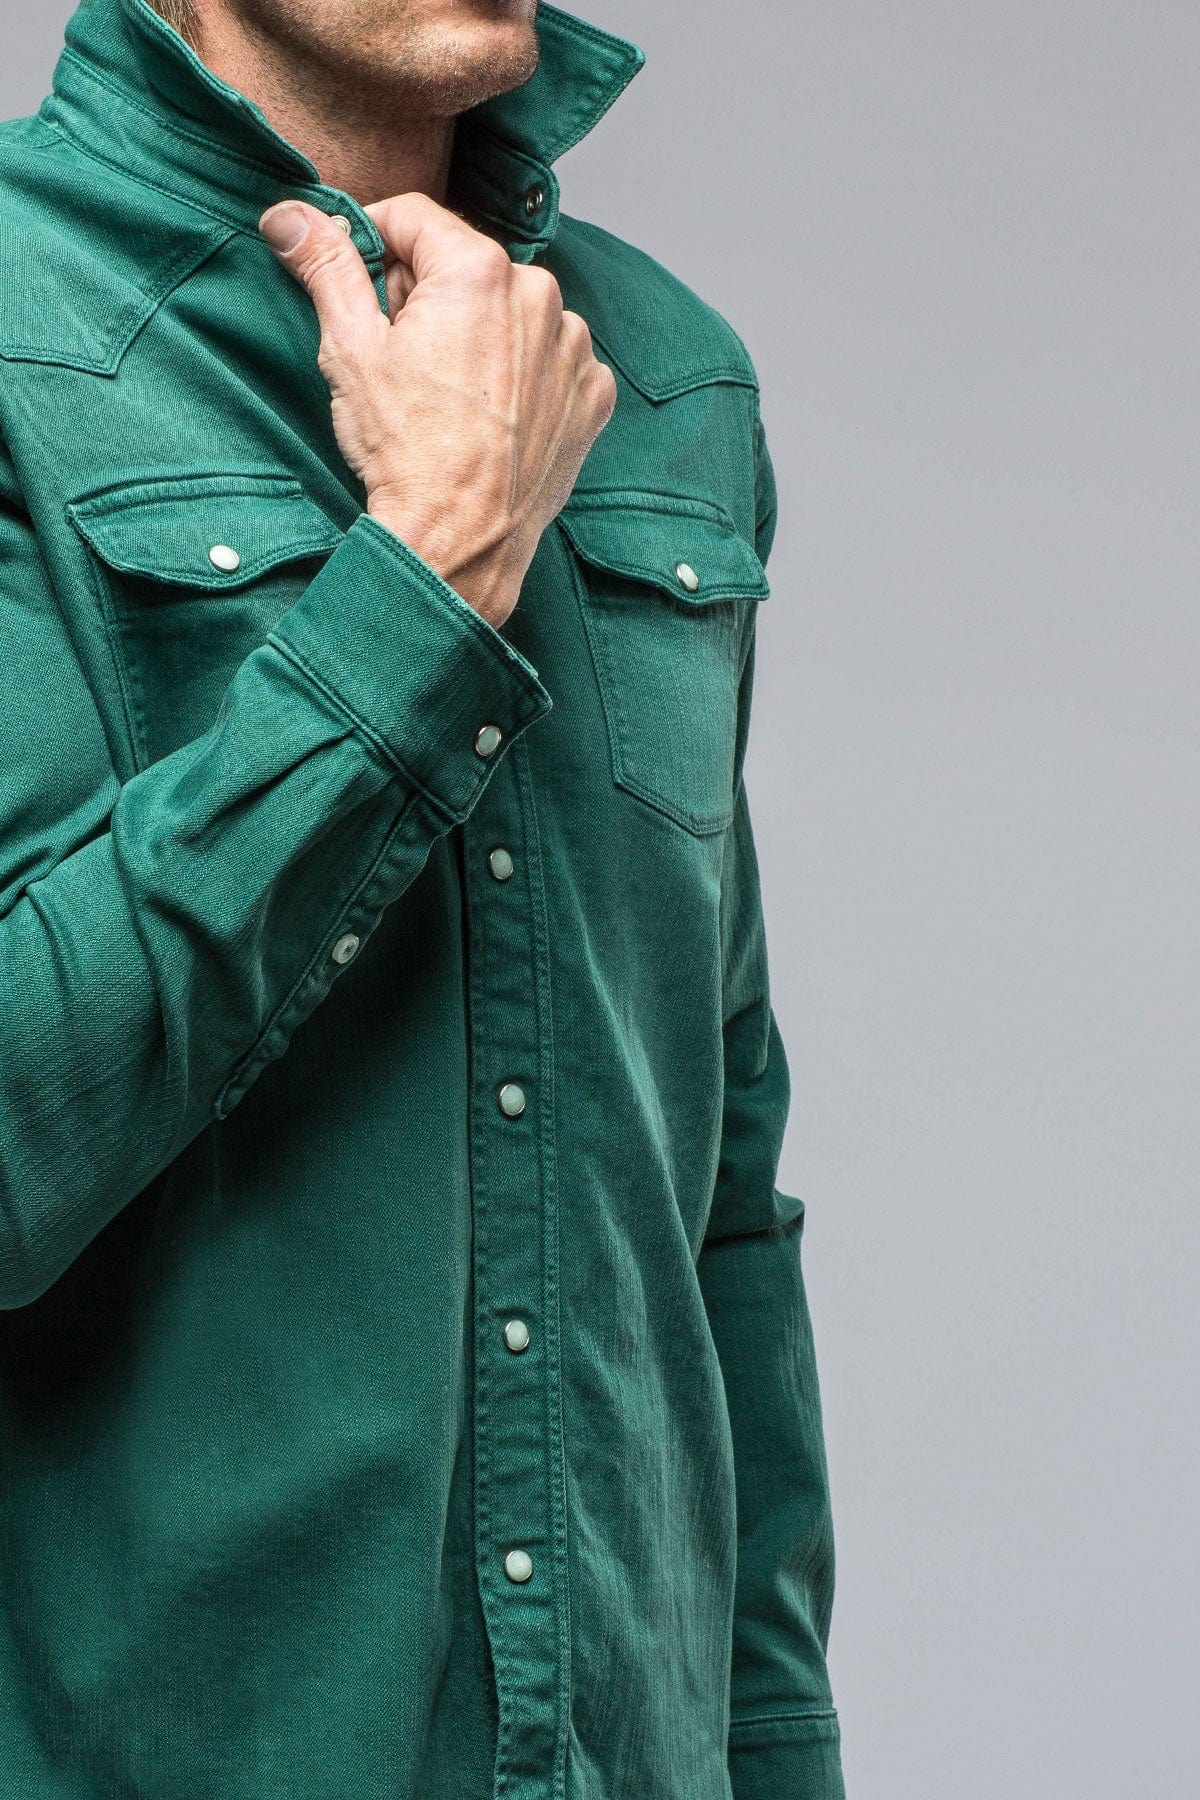 Ranger Colored Denim Snap Shirt In Green - AXEL'S